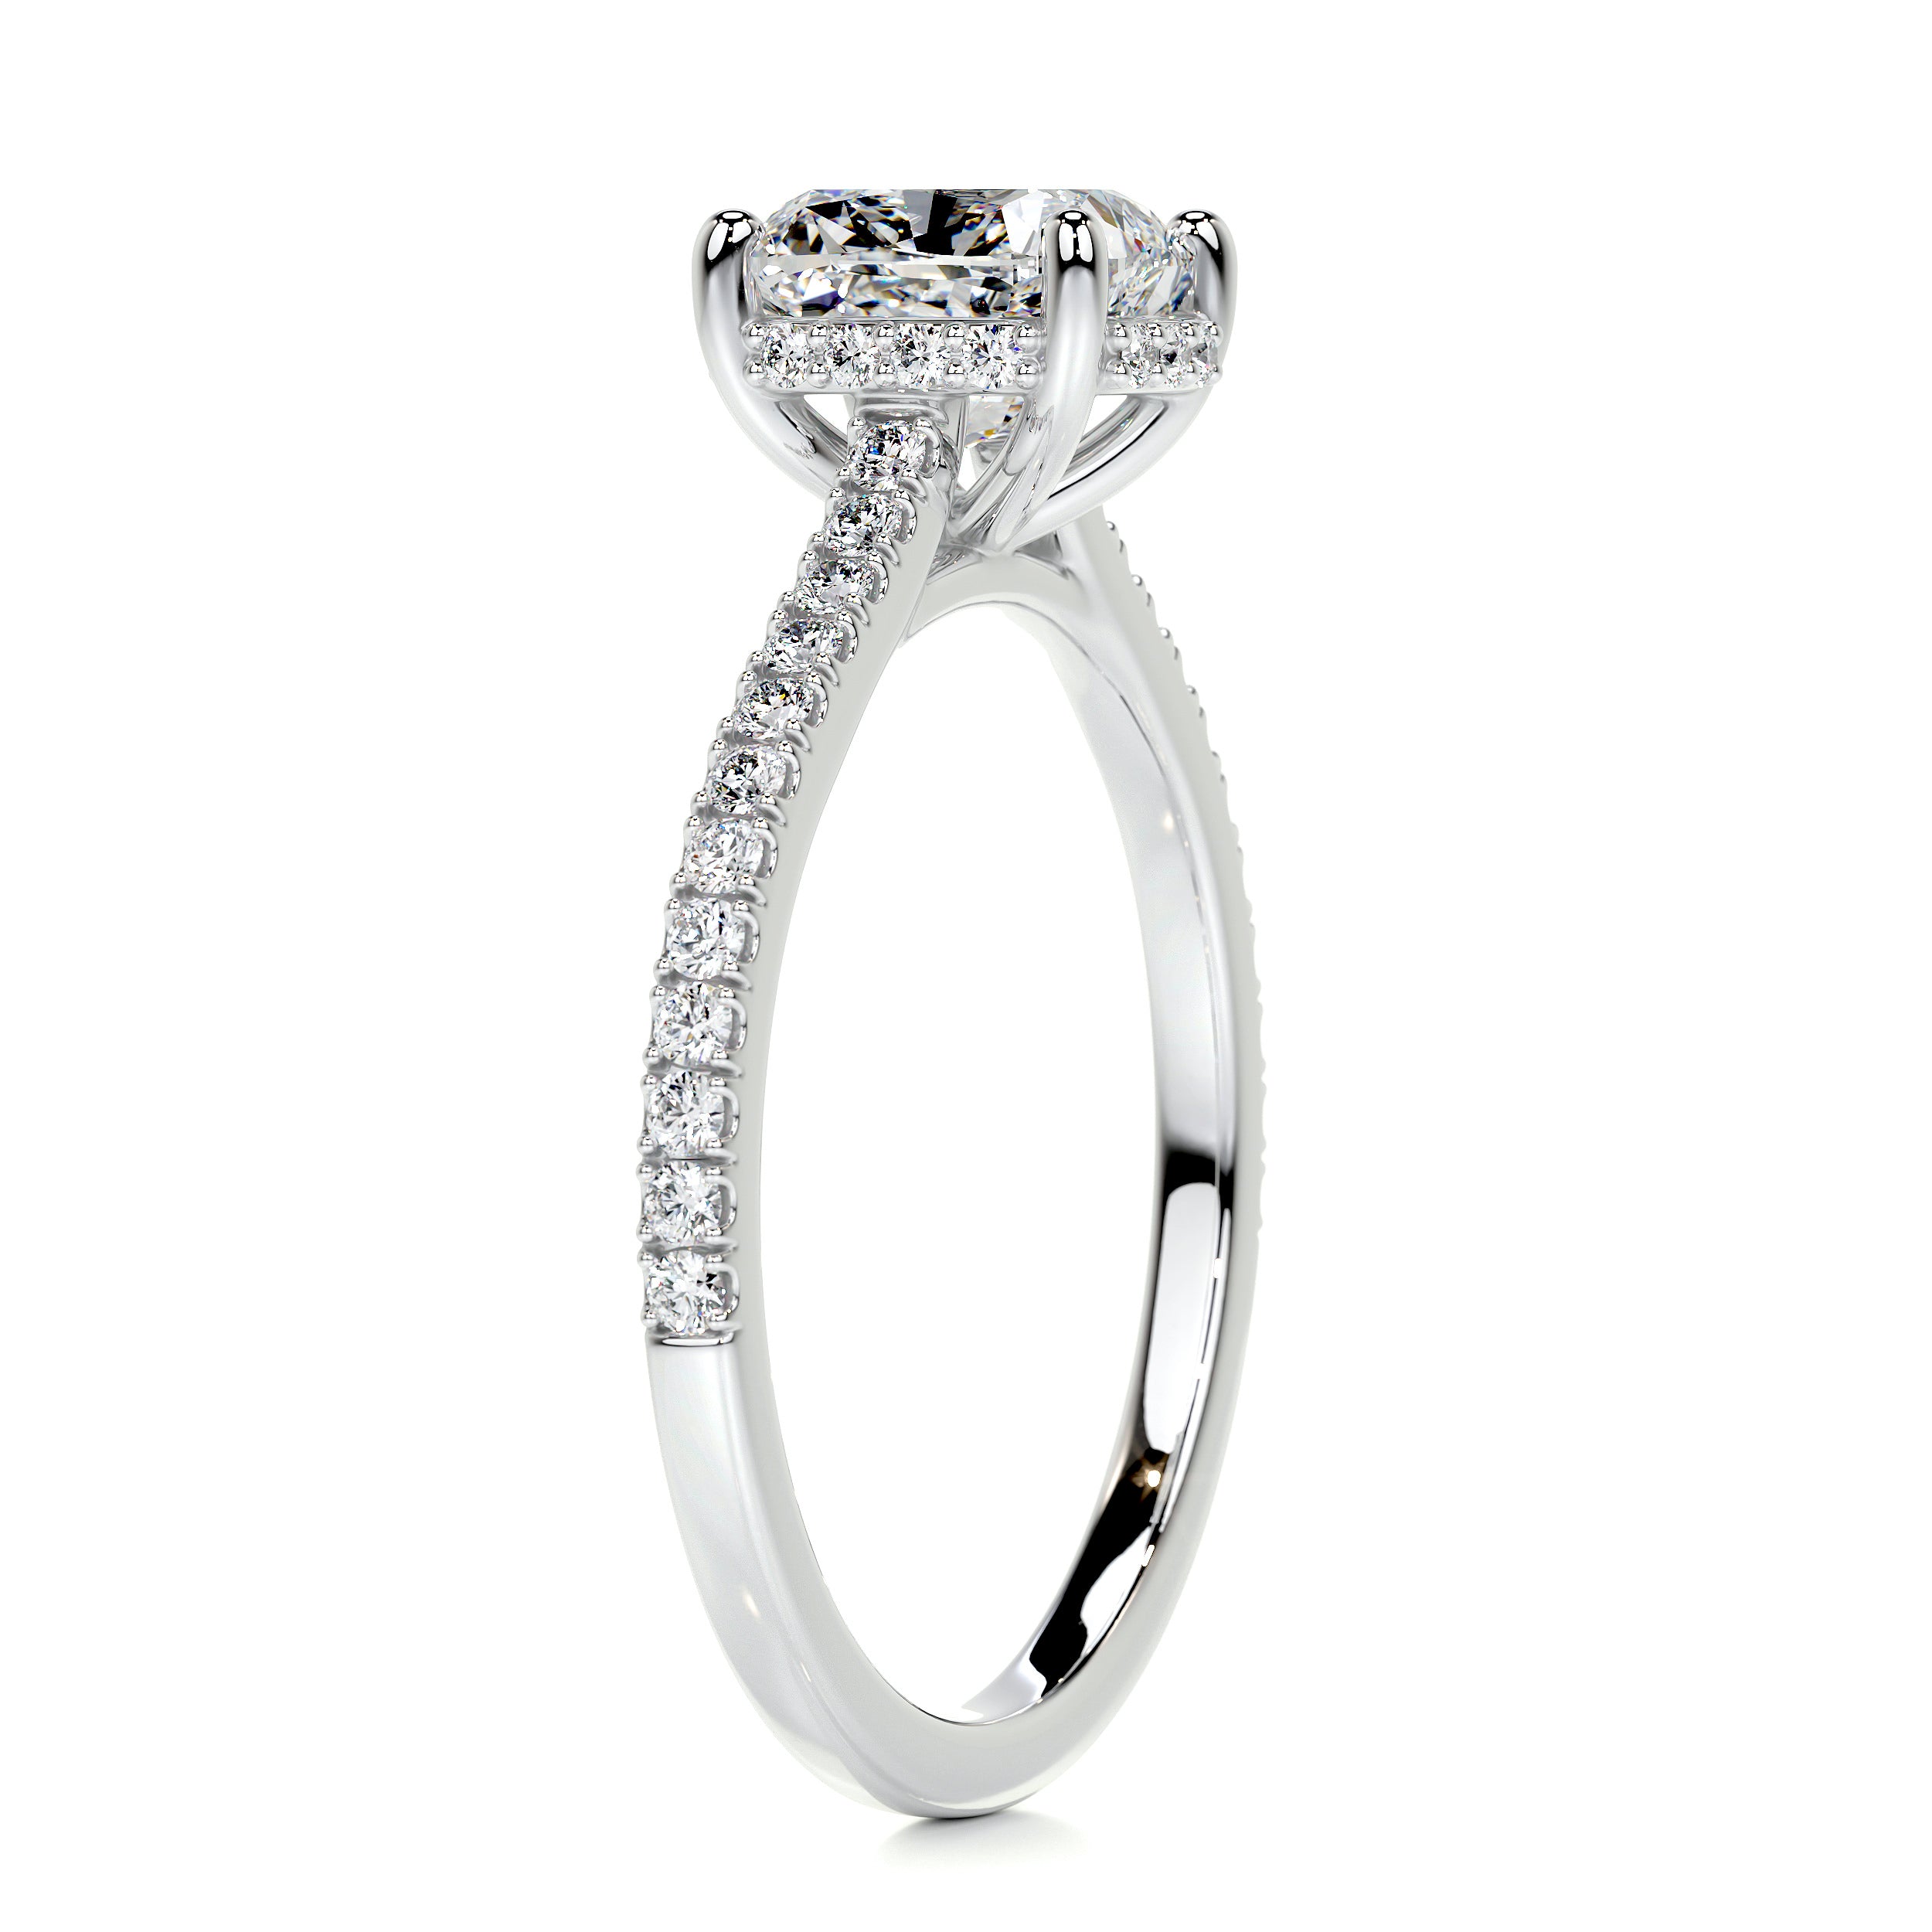 Deandra Diamond Engagement Ring   (1.75 Carat) -18K White Gold